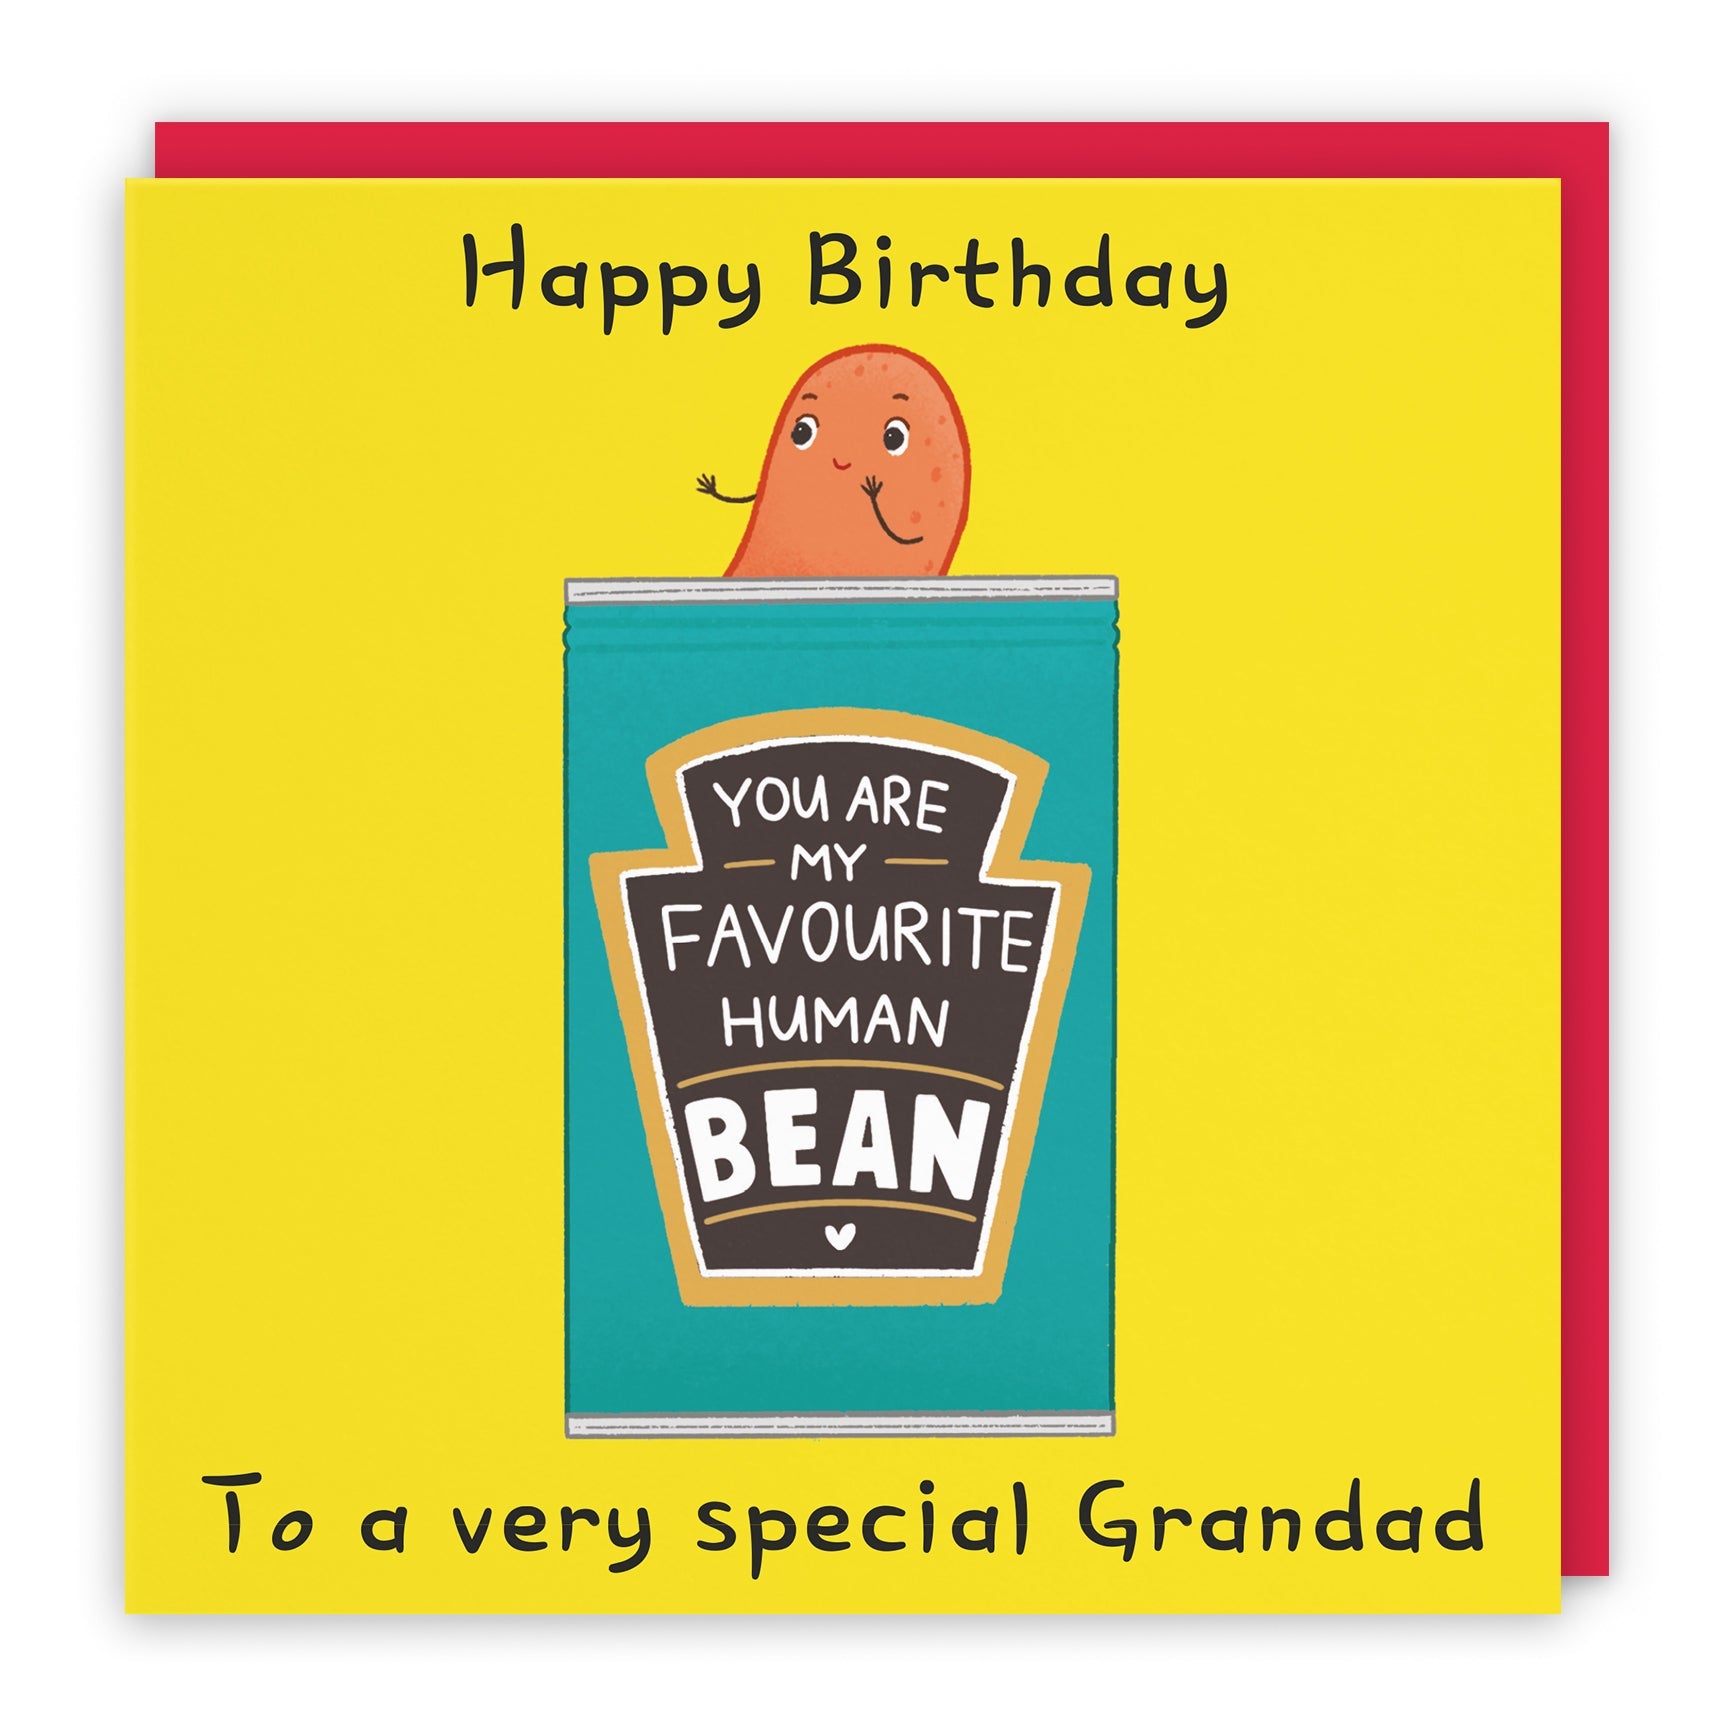 Grandad Birthday Cards - For Grandpa - For Grandad